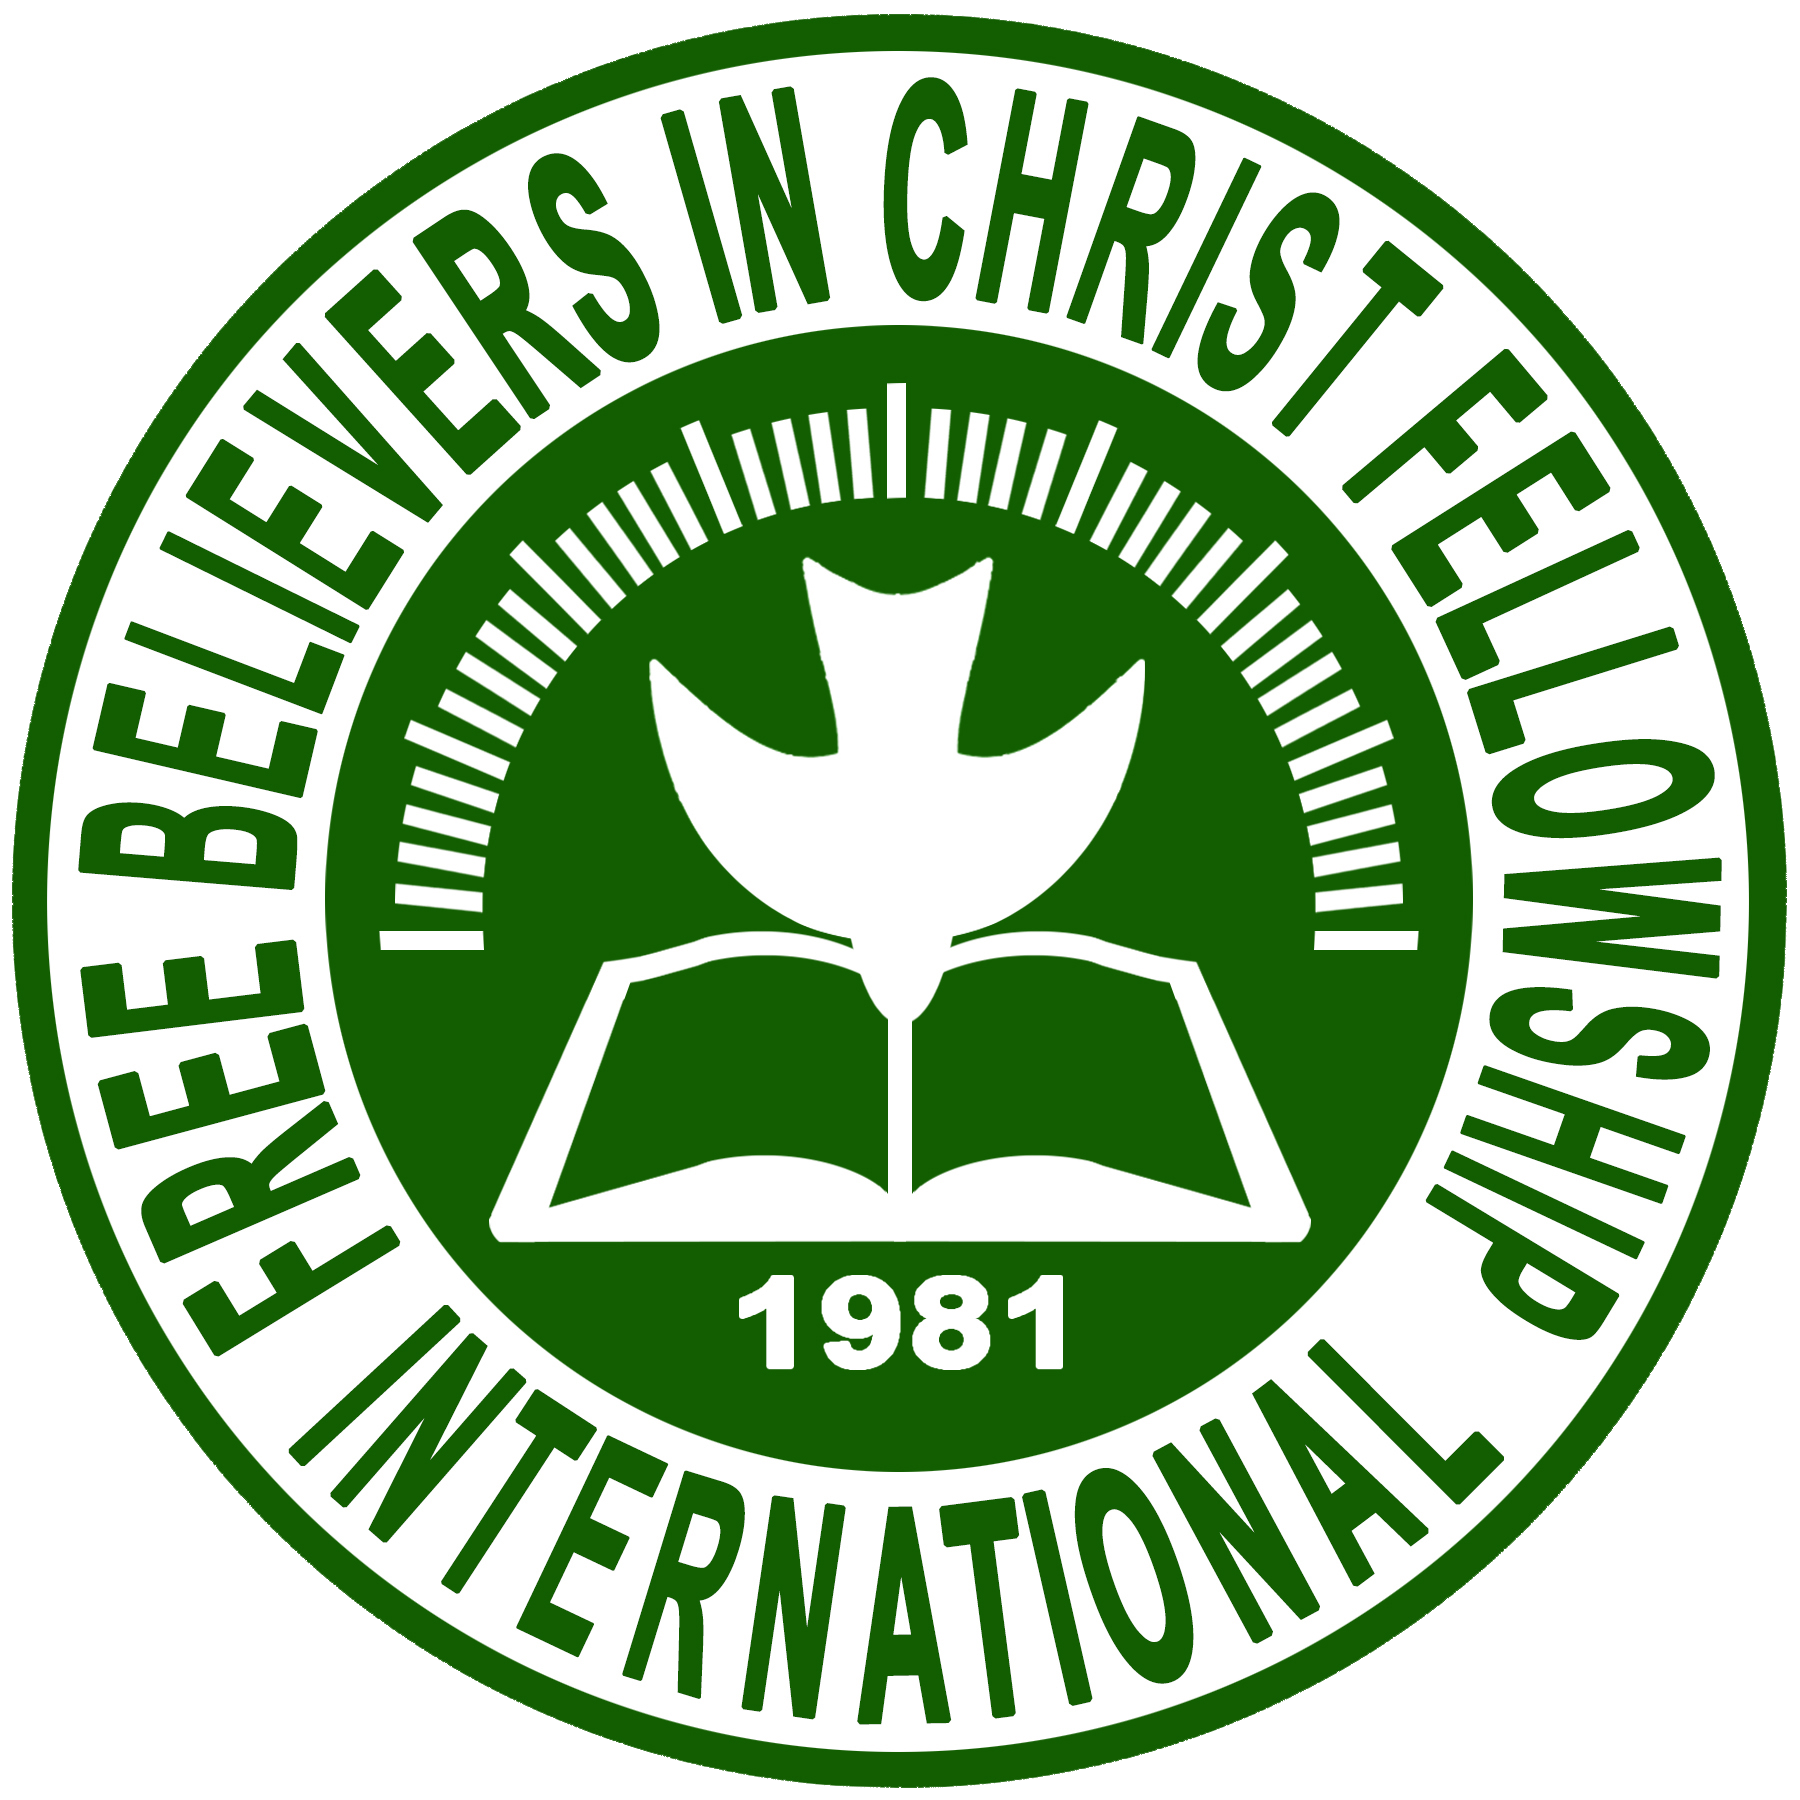 Free Believers In Christ Fellowship International